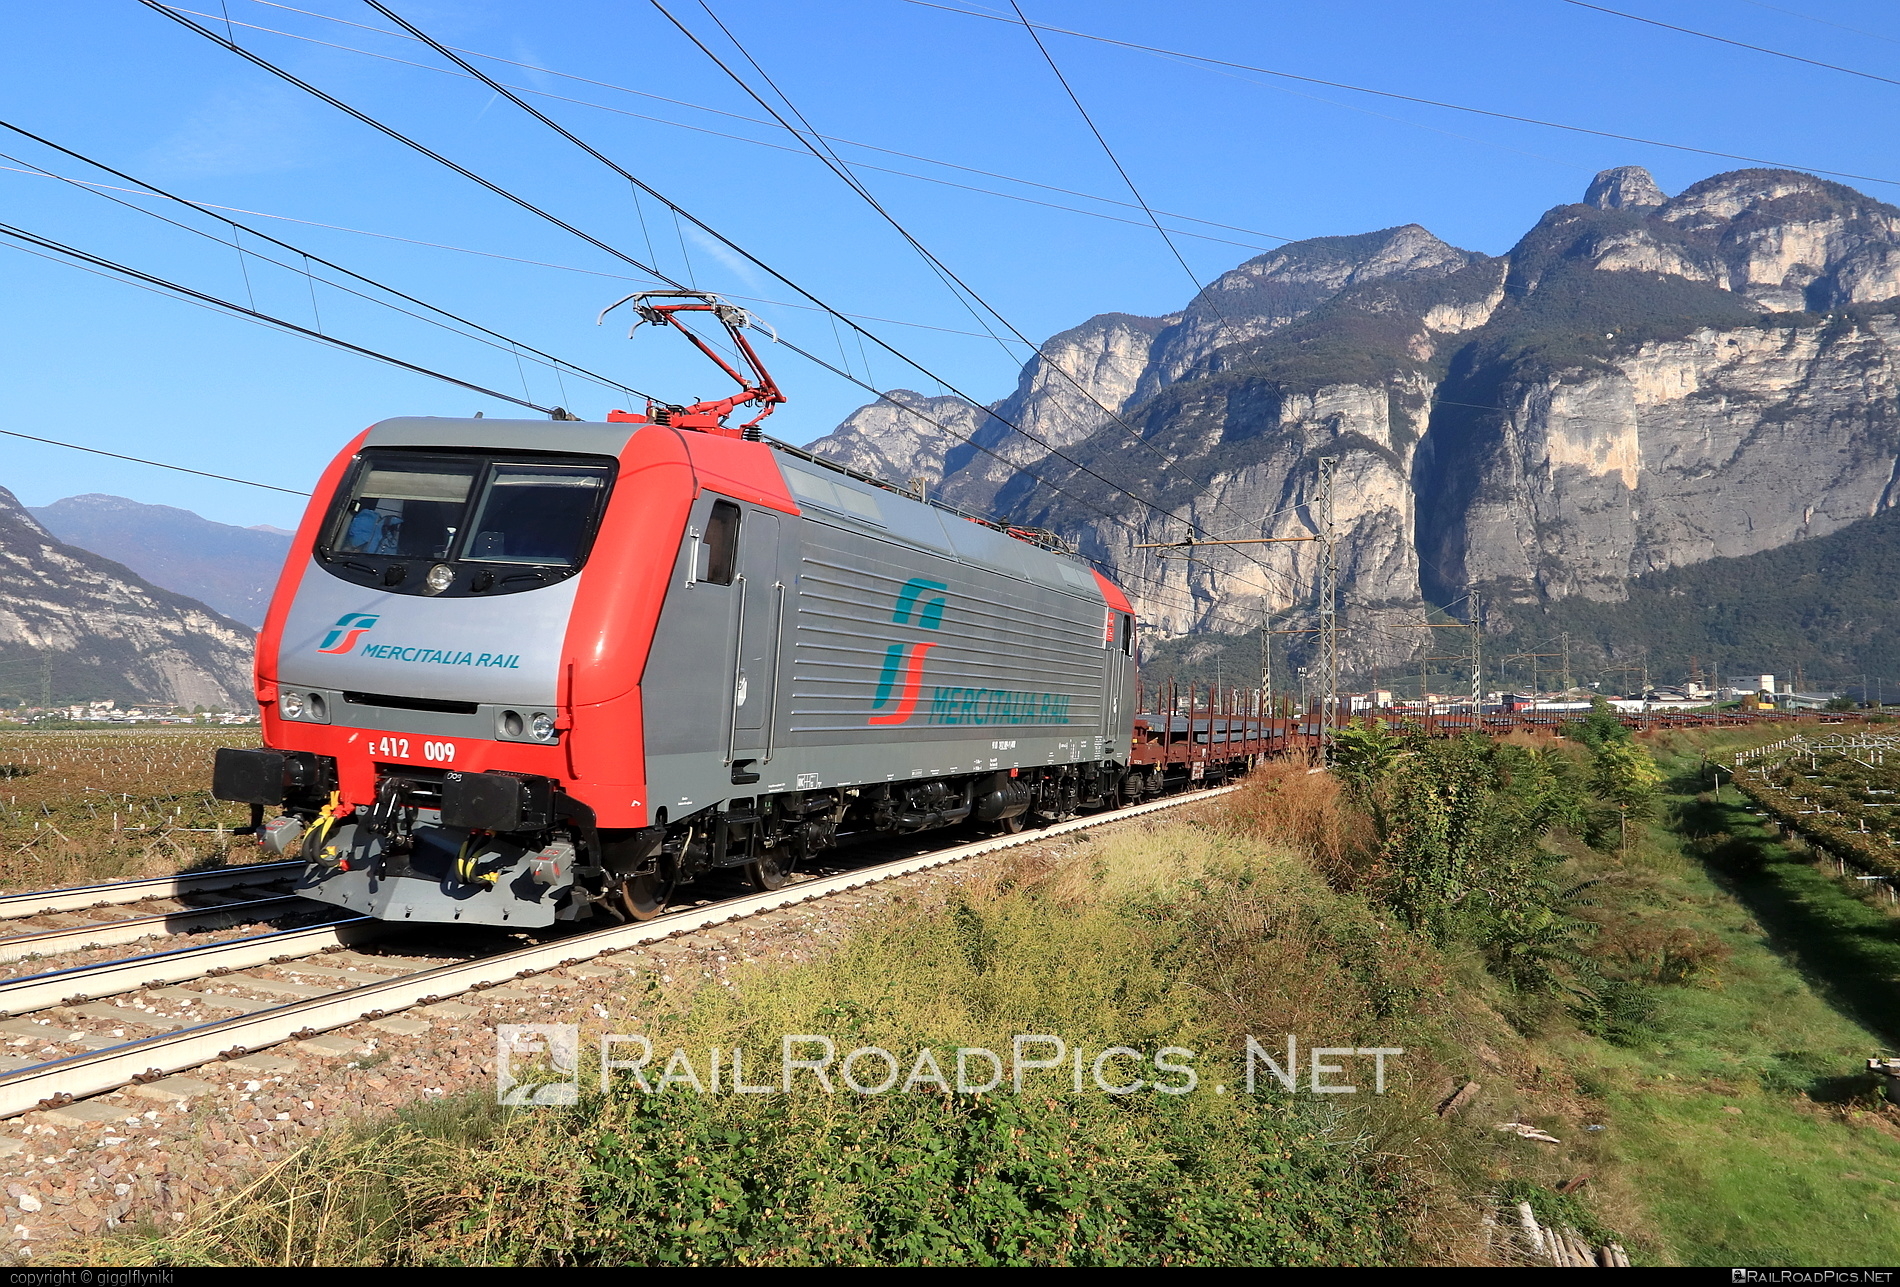 FS Class E.412 - E412 009 operated by Mercitalia Rail S.r.l. #e412 #ferroviedellostato #flatwagon #fs #fsClassE412 #fsitaliane #mercitalia